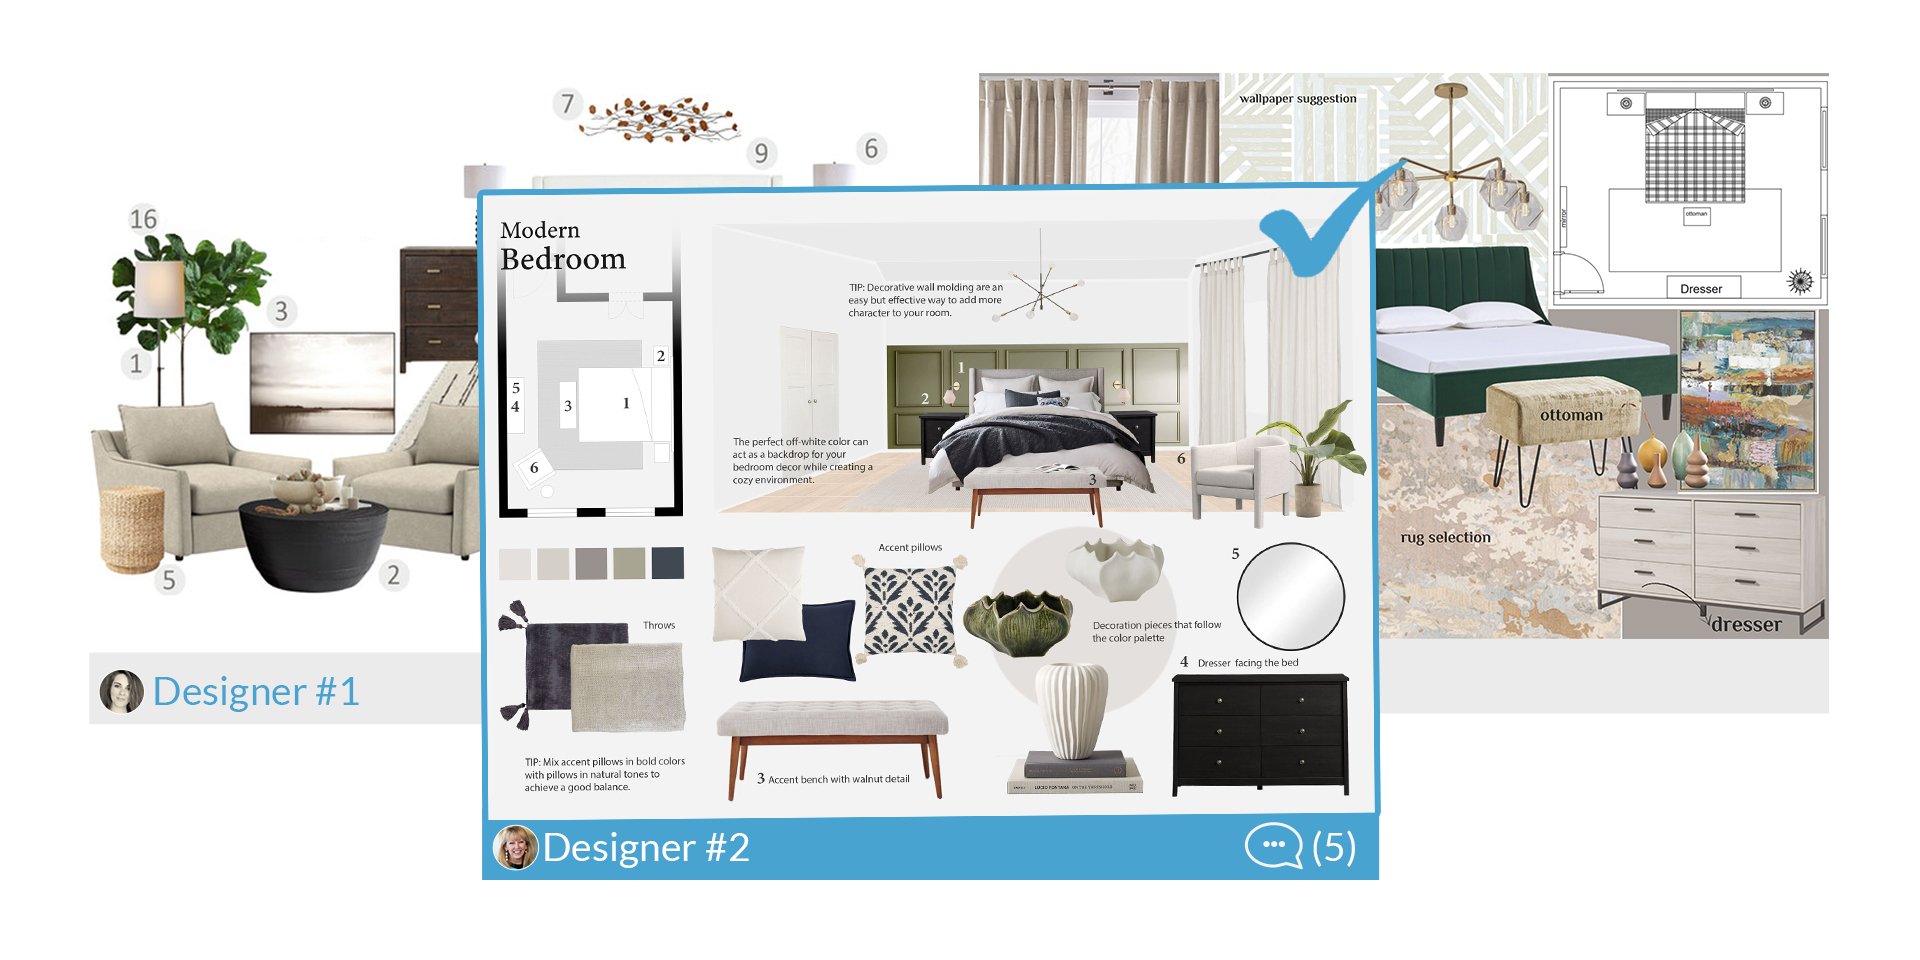 virtual interior design concepts from multiple designers